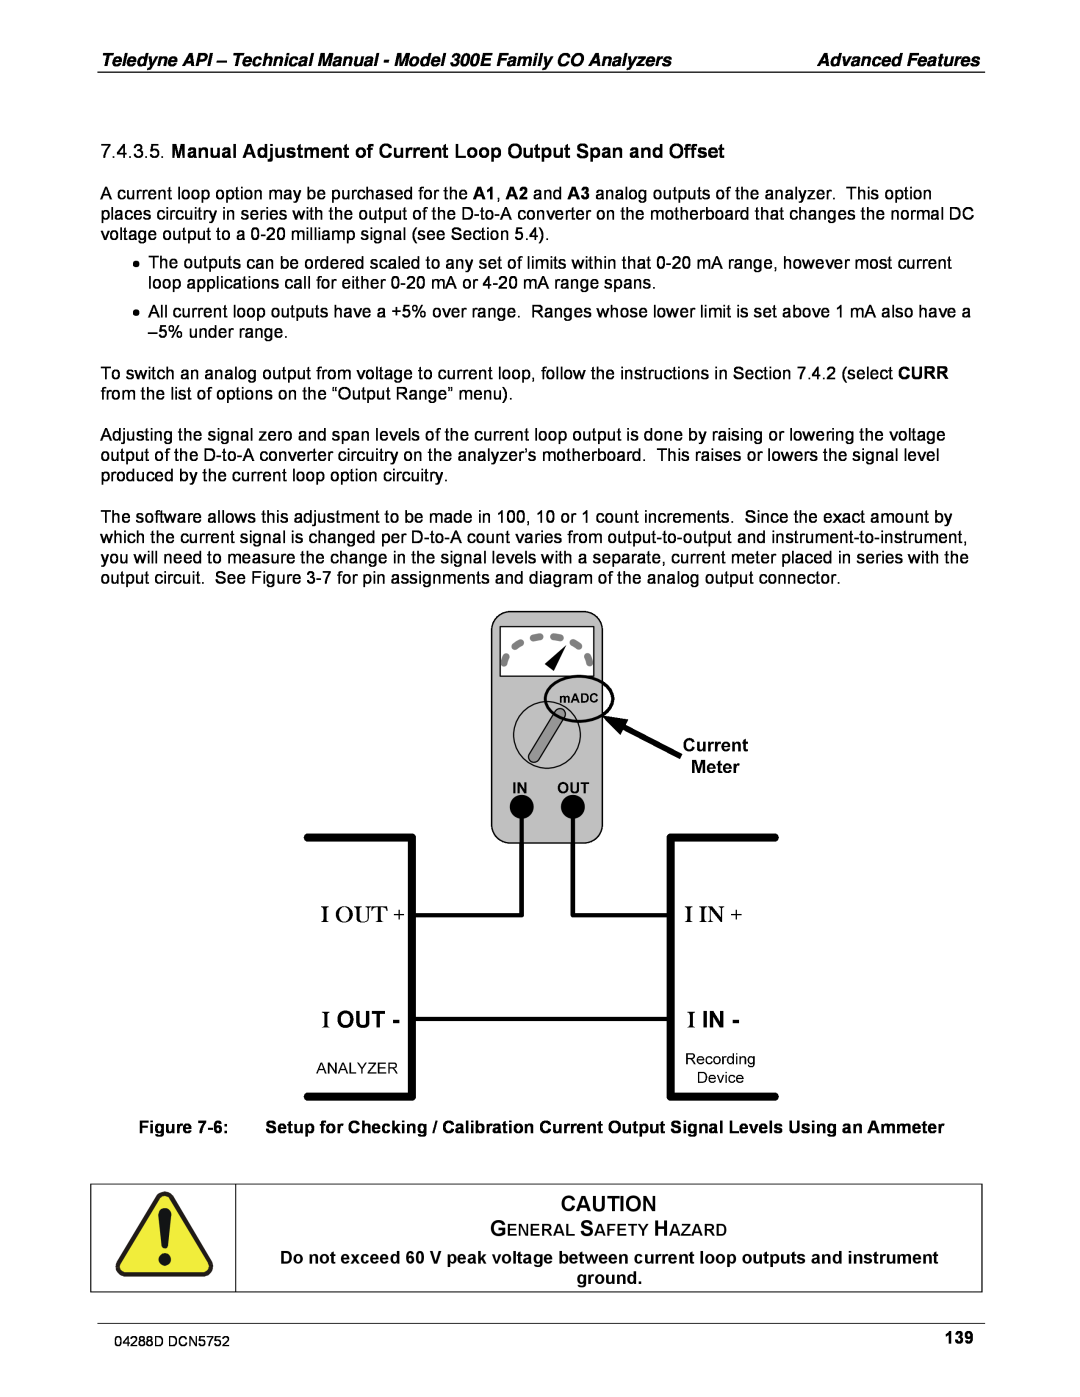 Teledyne M300EM operation manual General Safety Hazard, ground 